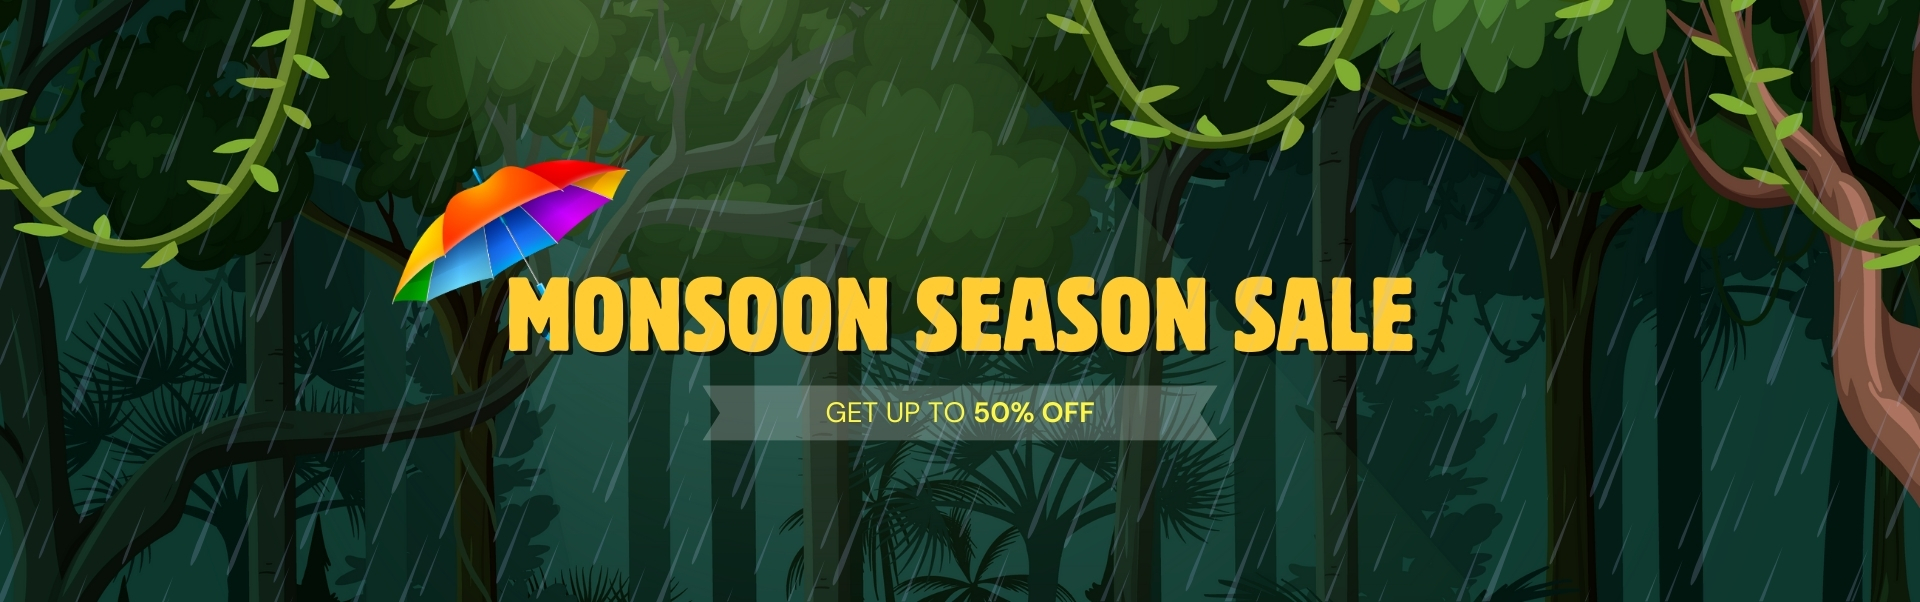 Monsoon Sale